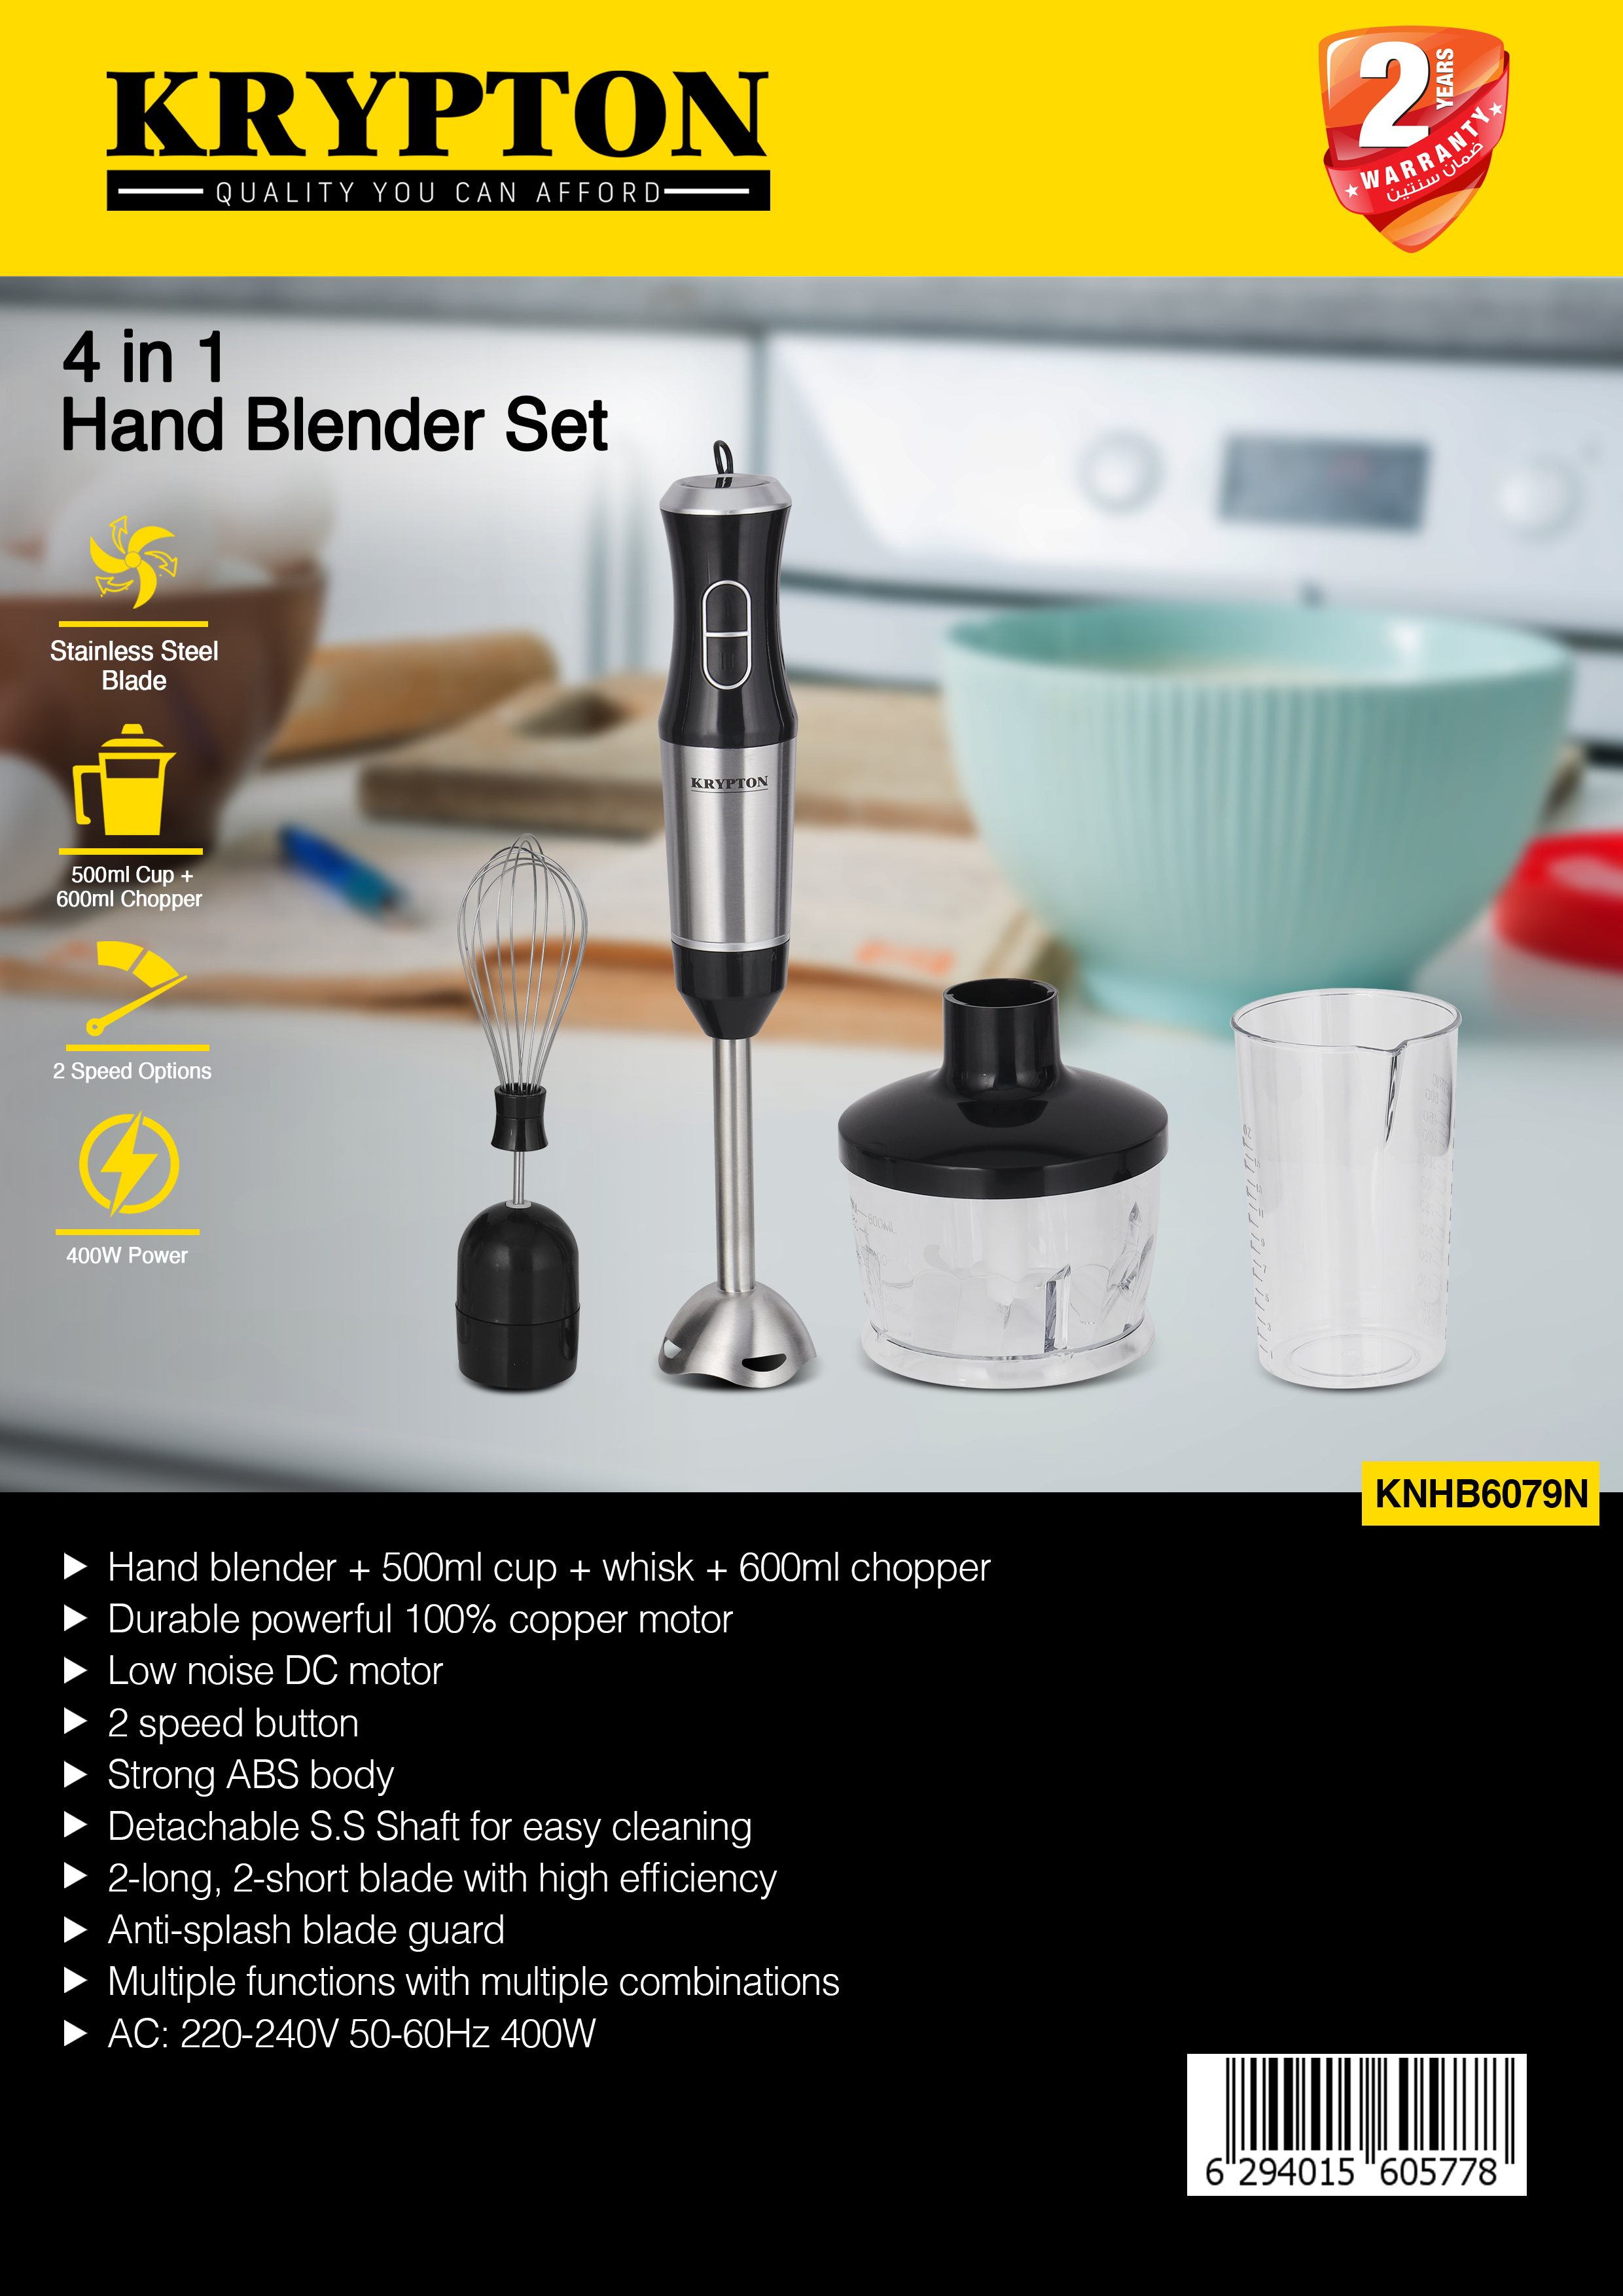 Hand Blender Stainless Steel Blade Handheld Electric Hand Blender For AC